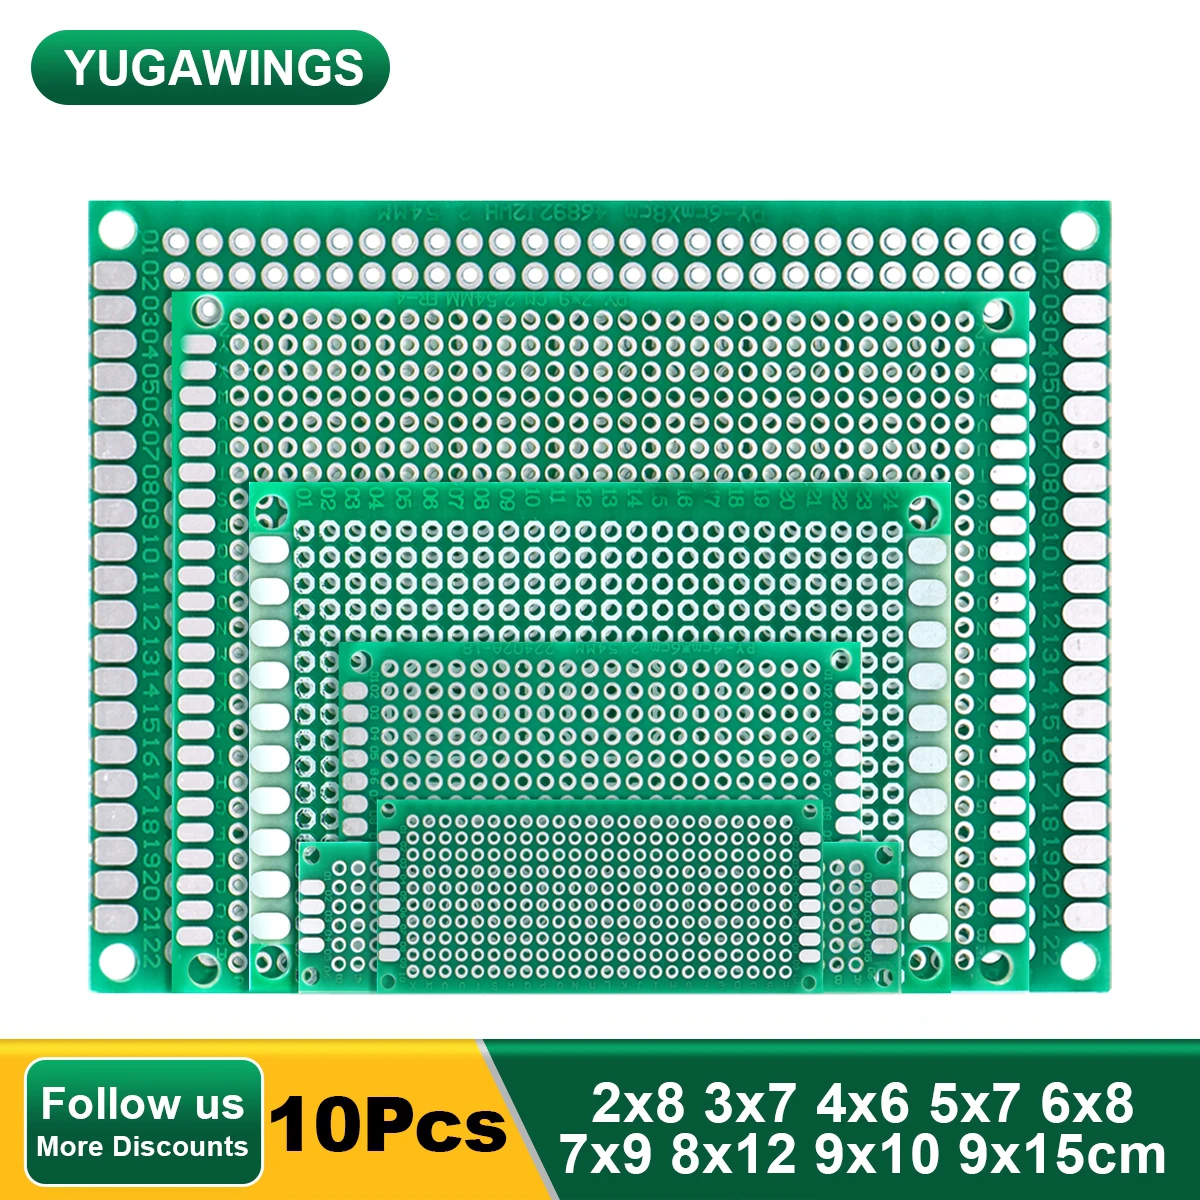 

10Pcs PCB Board Single Side Copper PCB Prototype Circuit DIY Universal Stripboard Prototyping 2x8 3x7 4x6 5x7 6x8 7x9 8x12 9x10